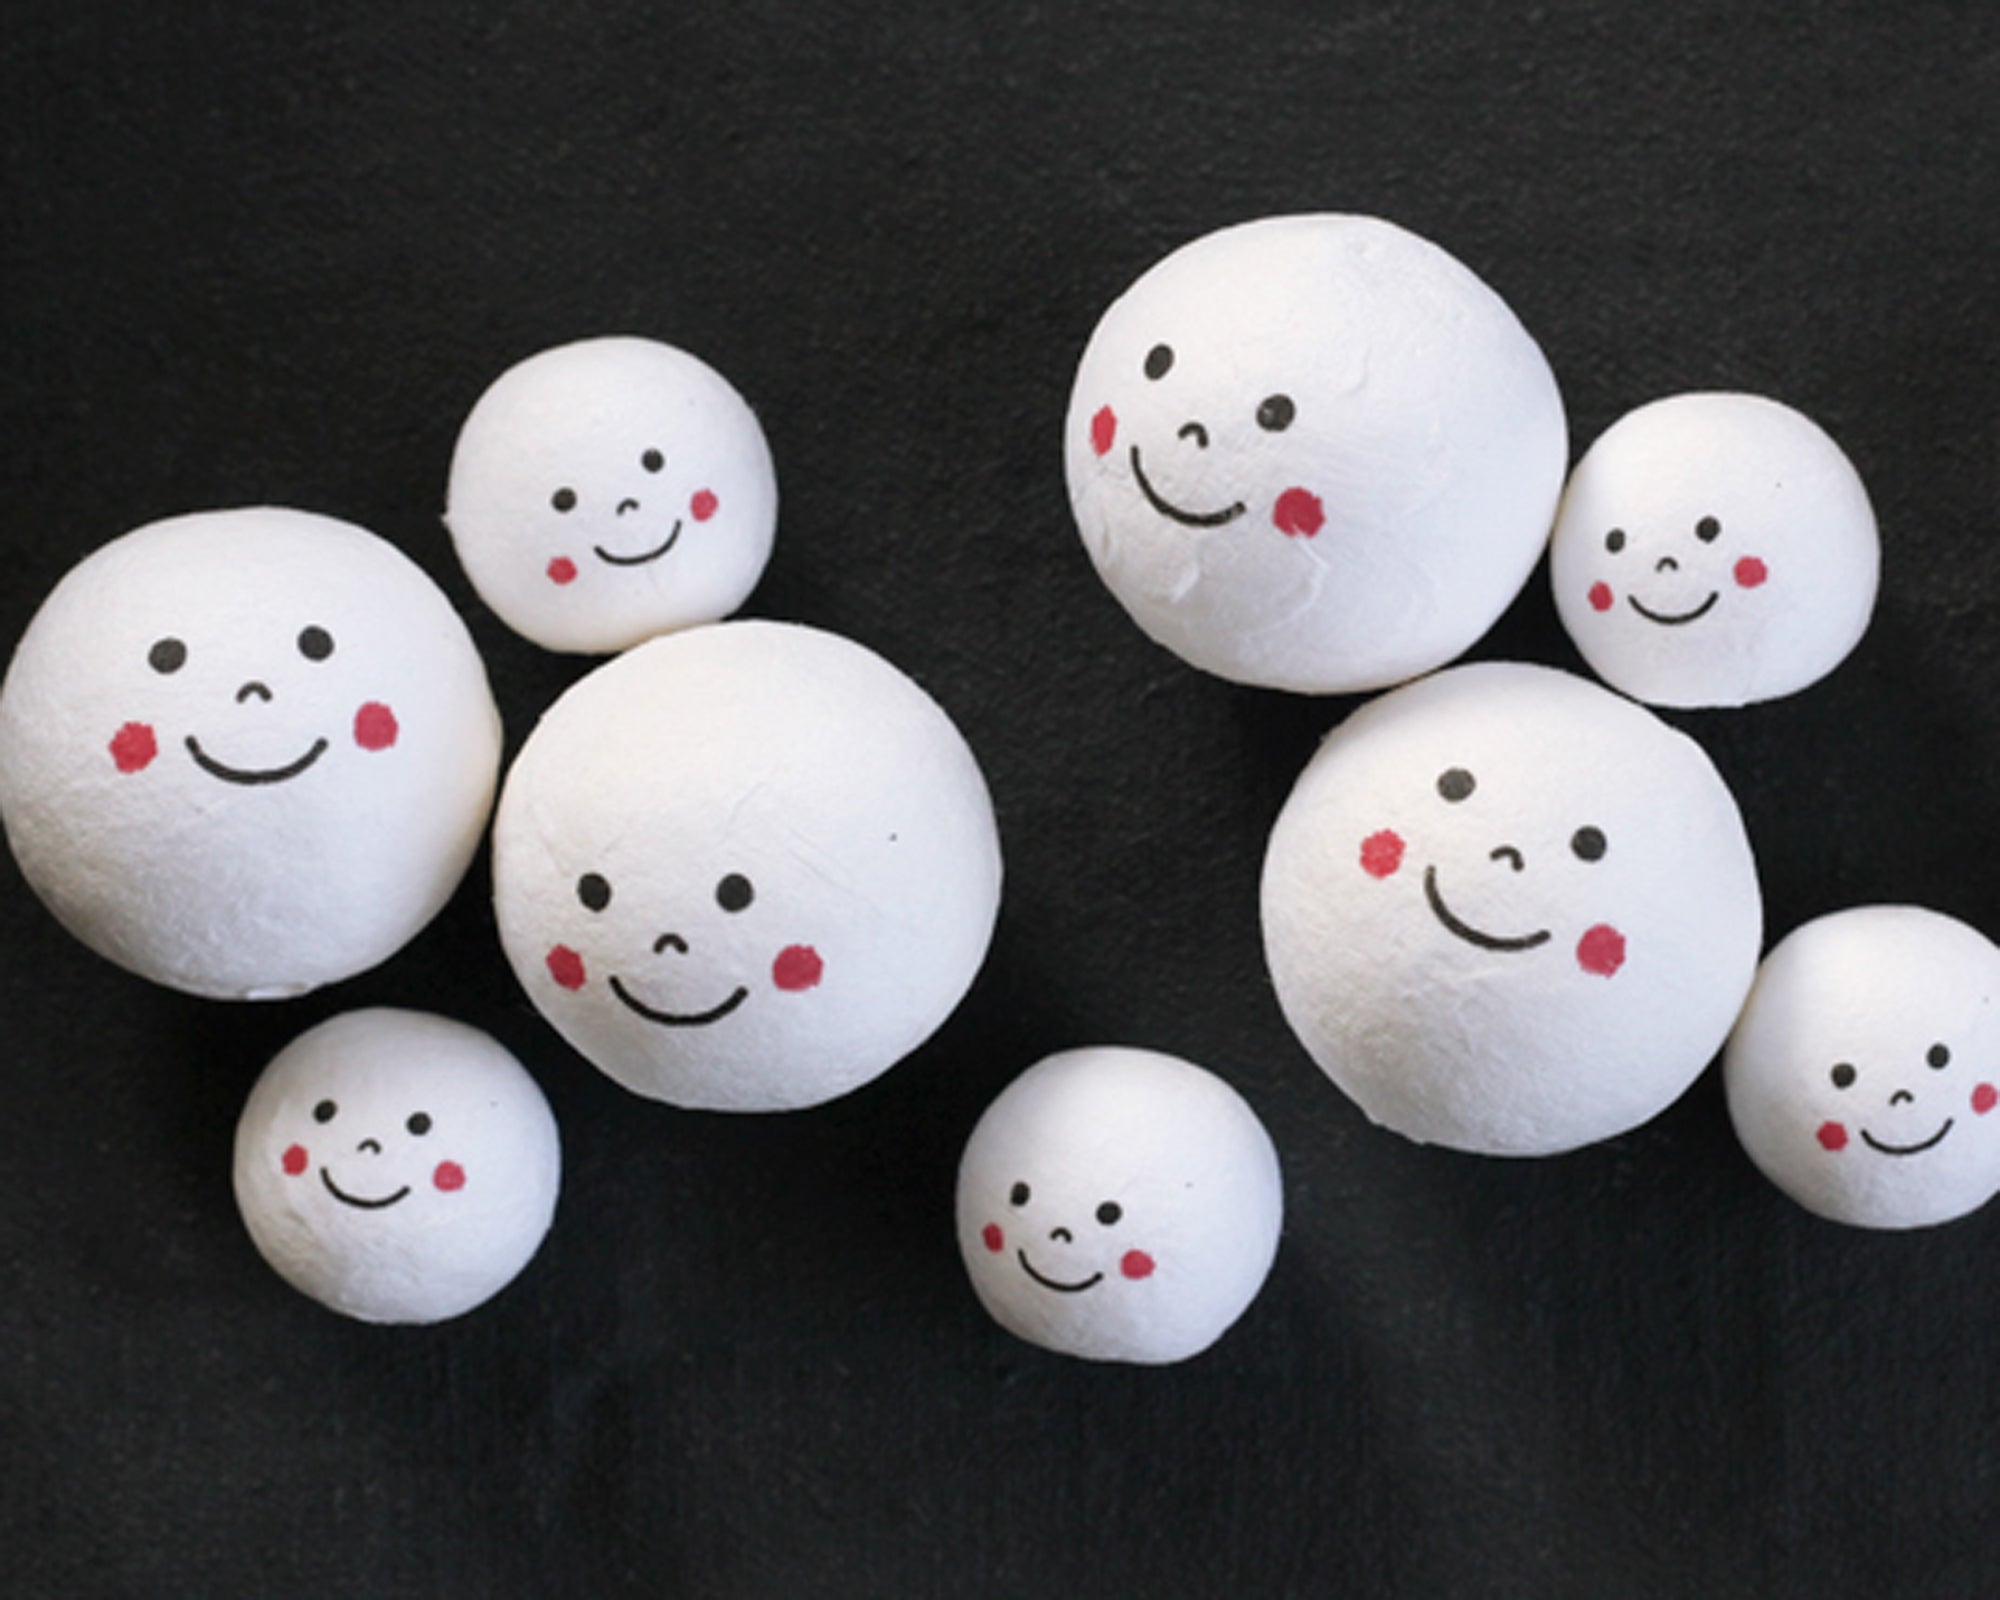 Spun Cotton Heads: SMILEY FACE - Vintage-Style Cotton Doll Heads with Happy Faces, 12 Pcs.